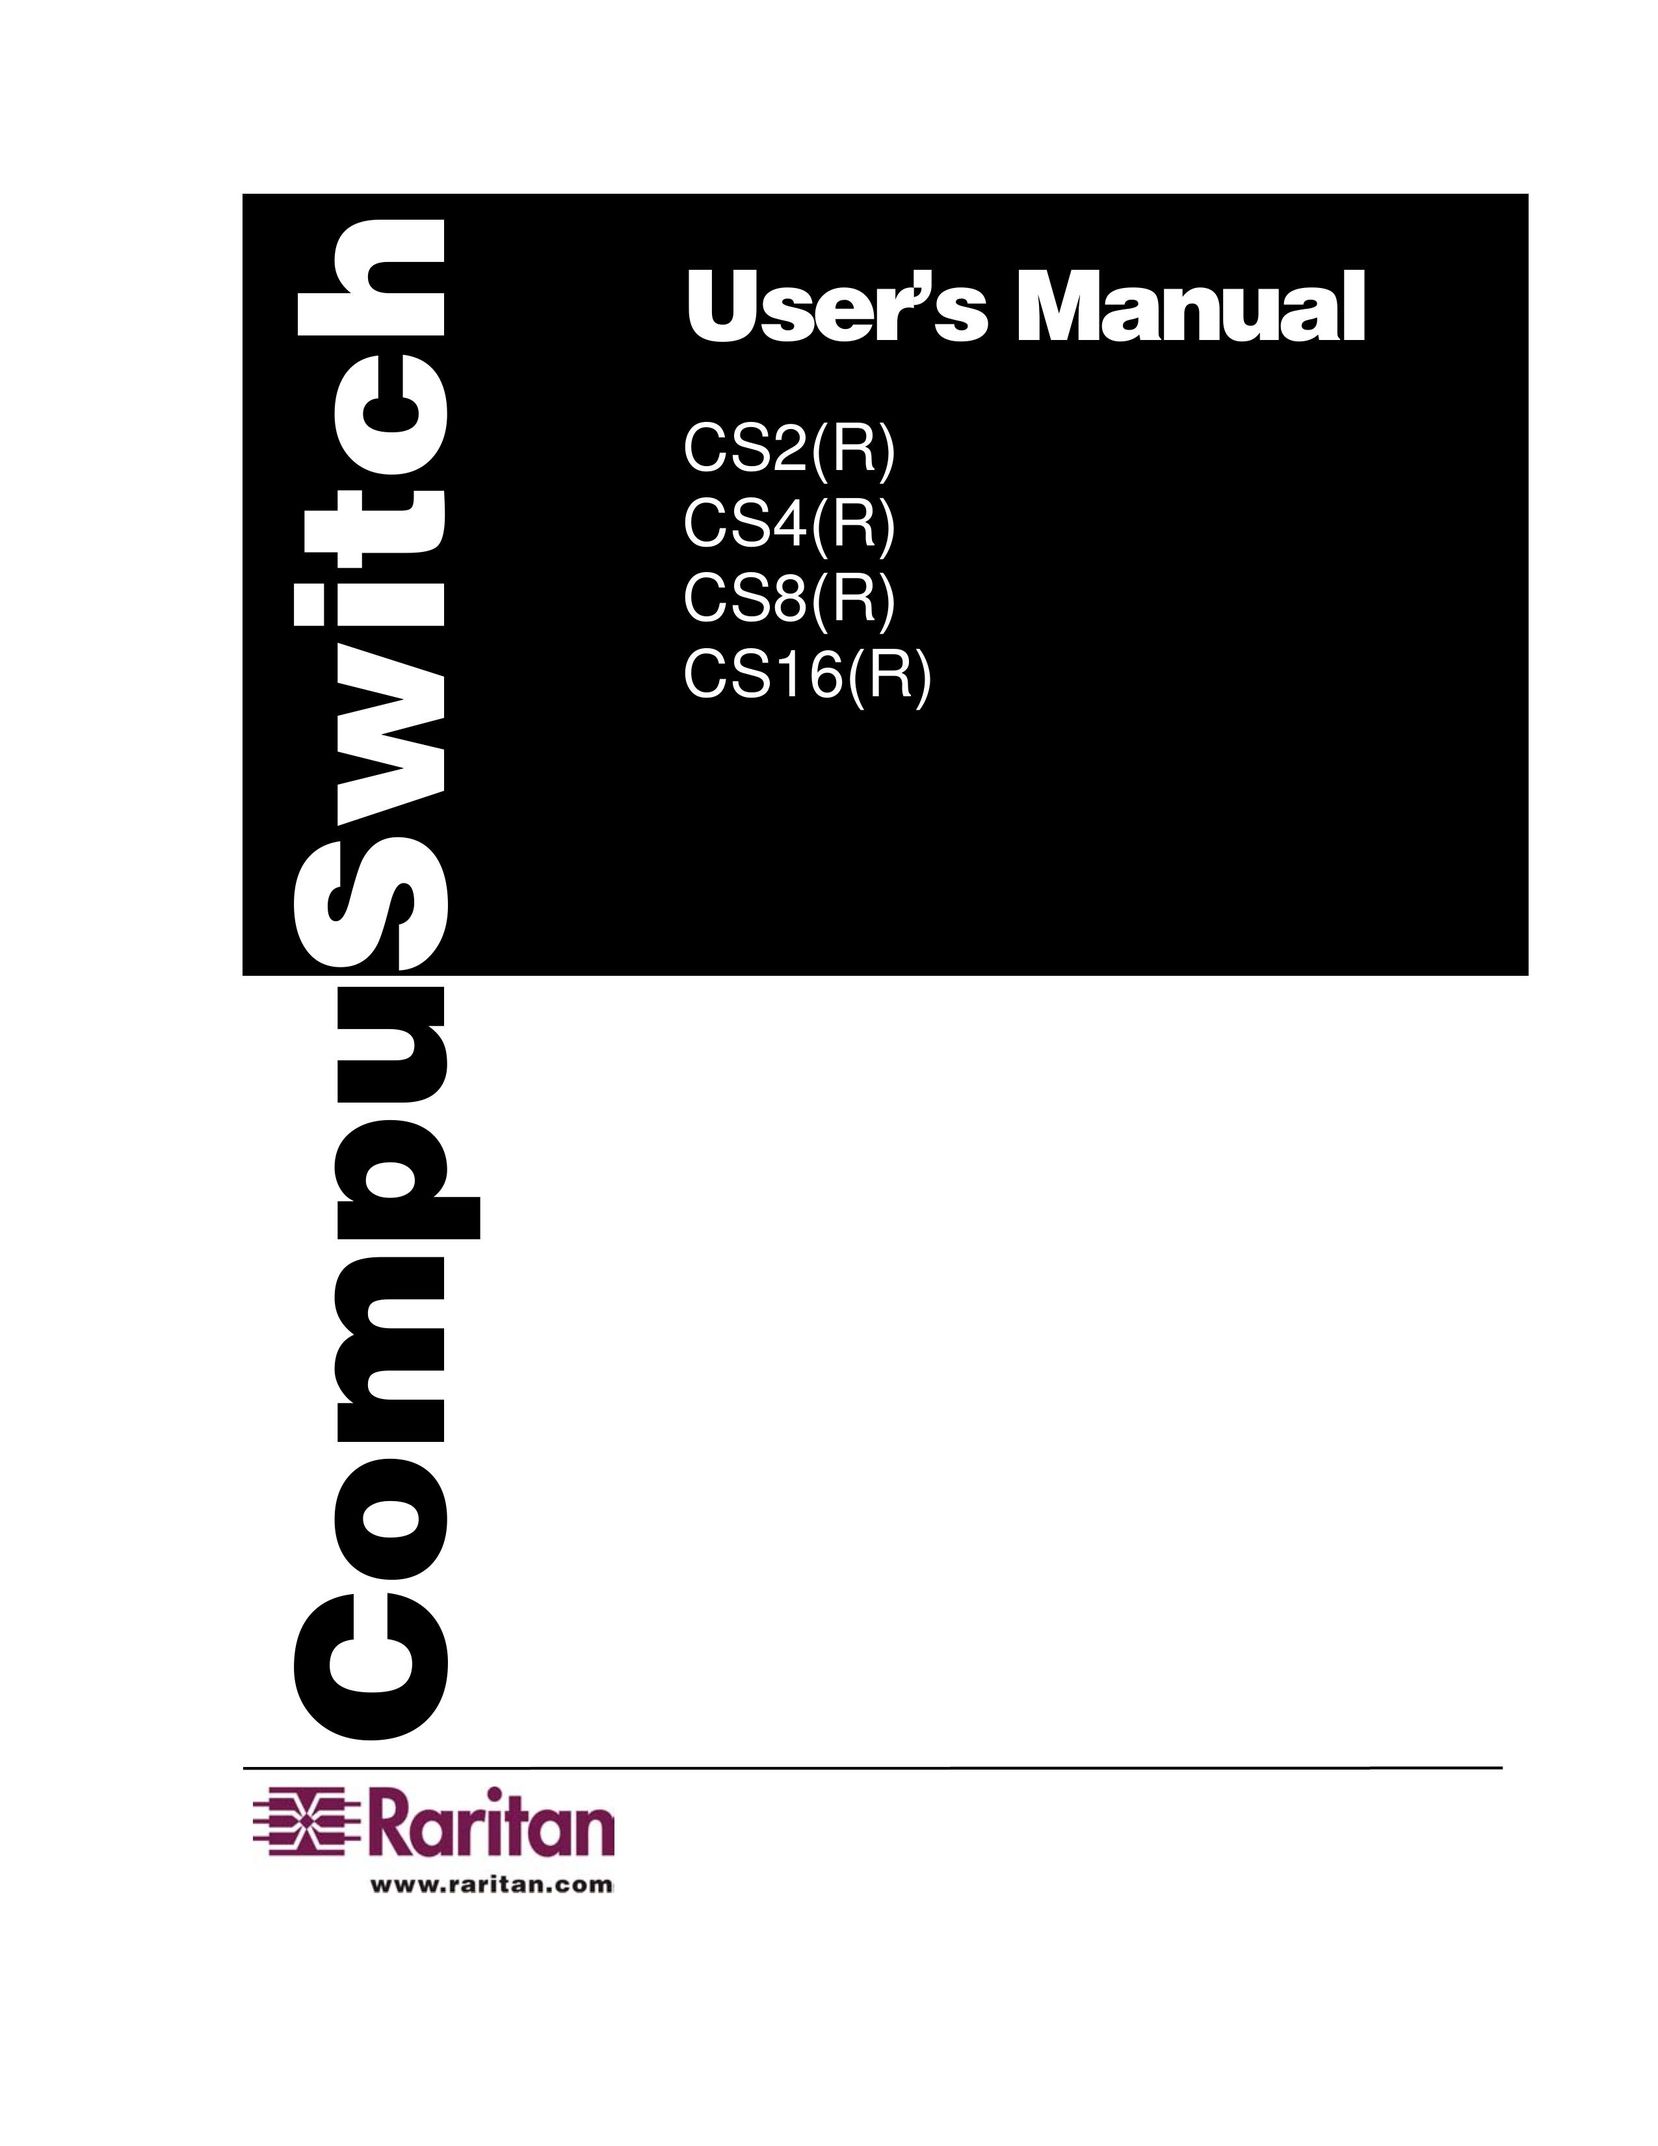 Raritan Engineering CS2(R) Switch User Manual